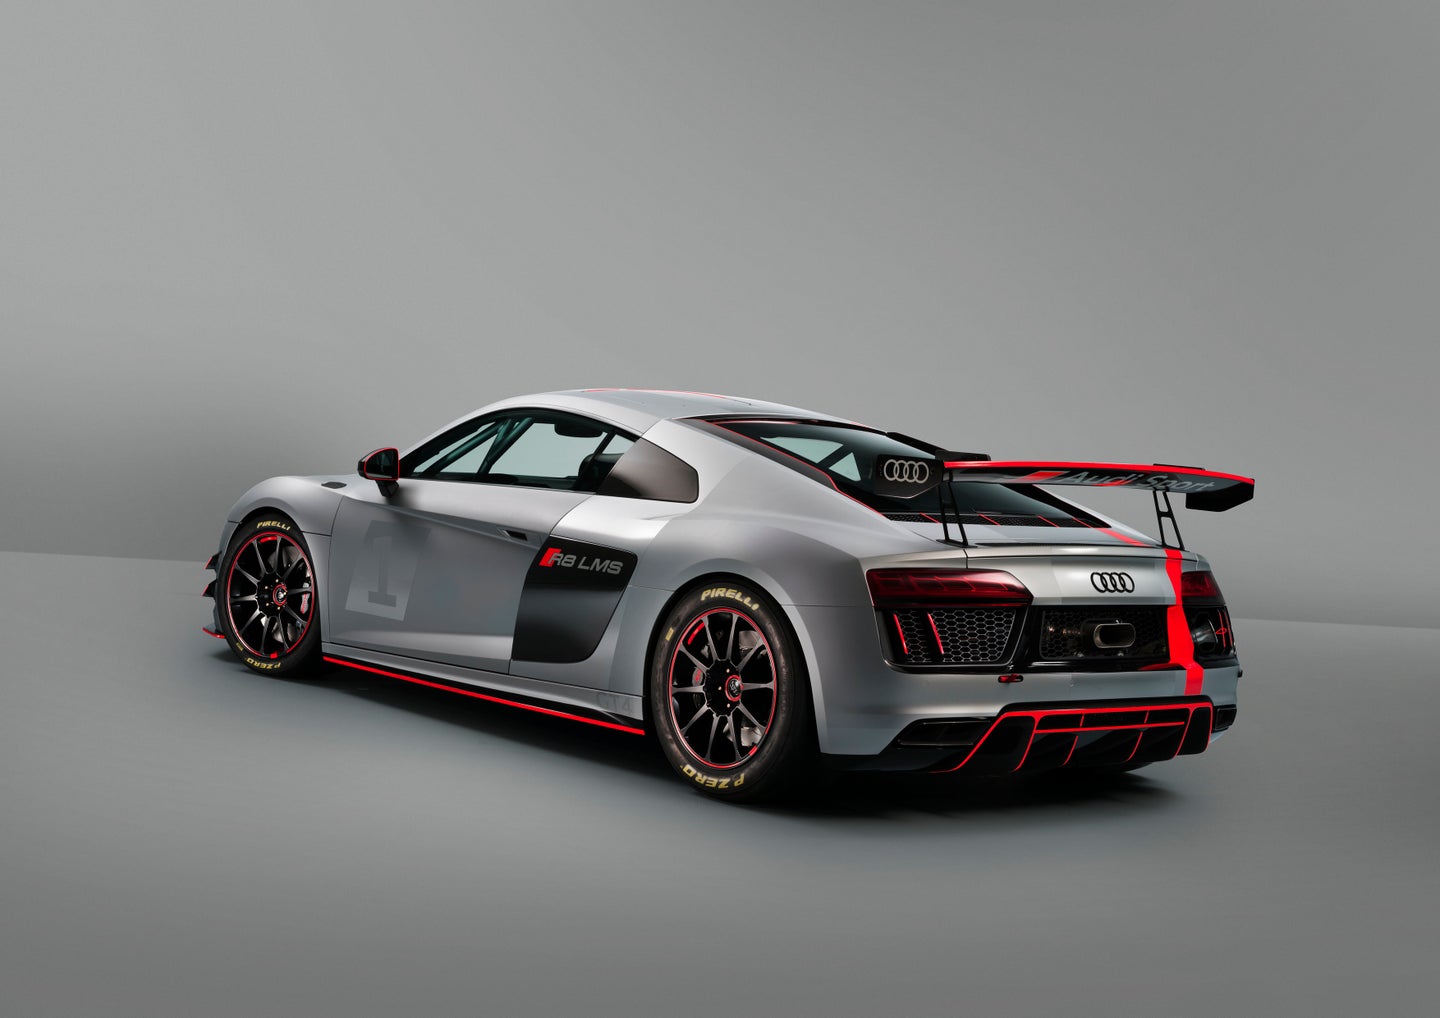 Audi Unveils Its Version of the GT4 Race Car